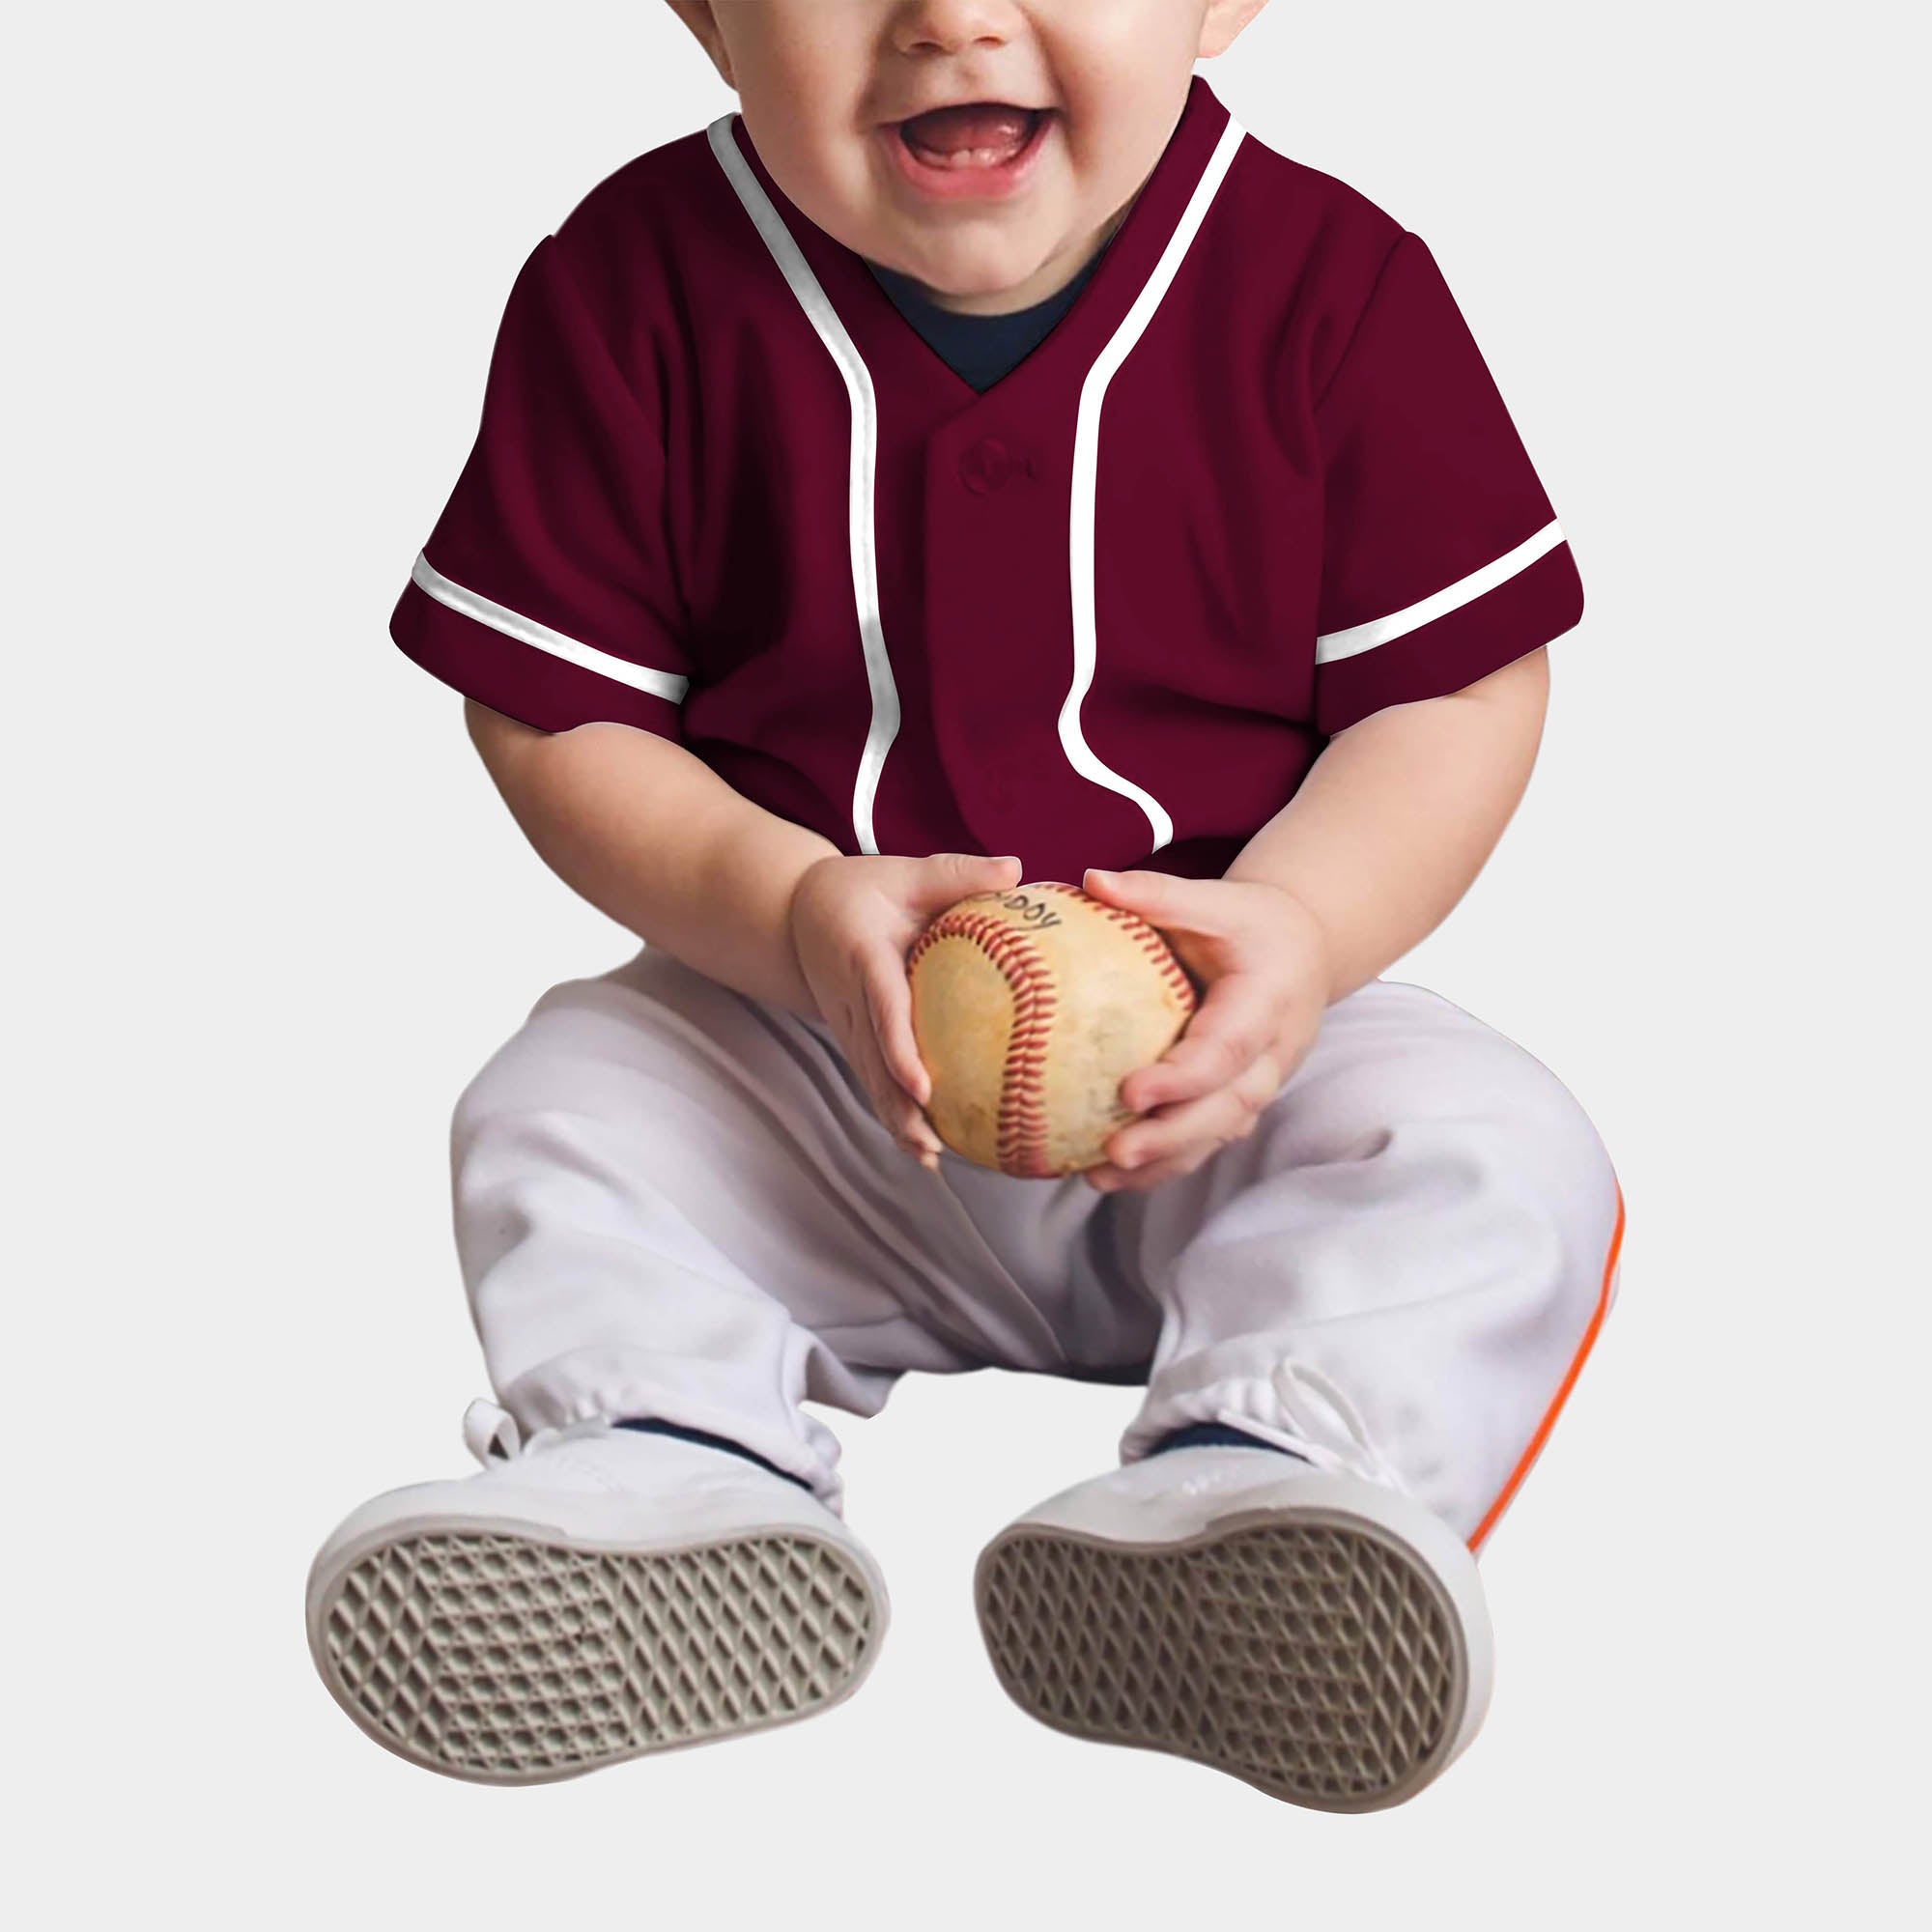 Outerstuff Kids MLB Texas Rangers Button Up Baseball Team Home Jersey –  Fanletic